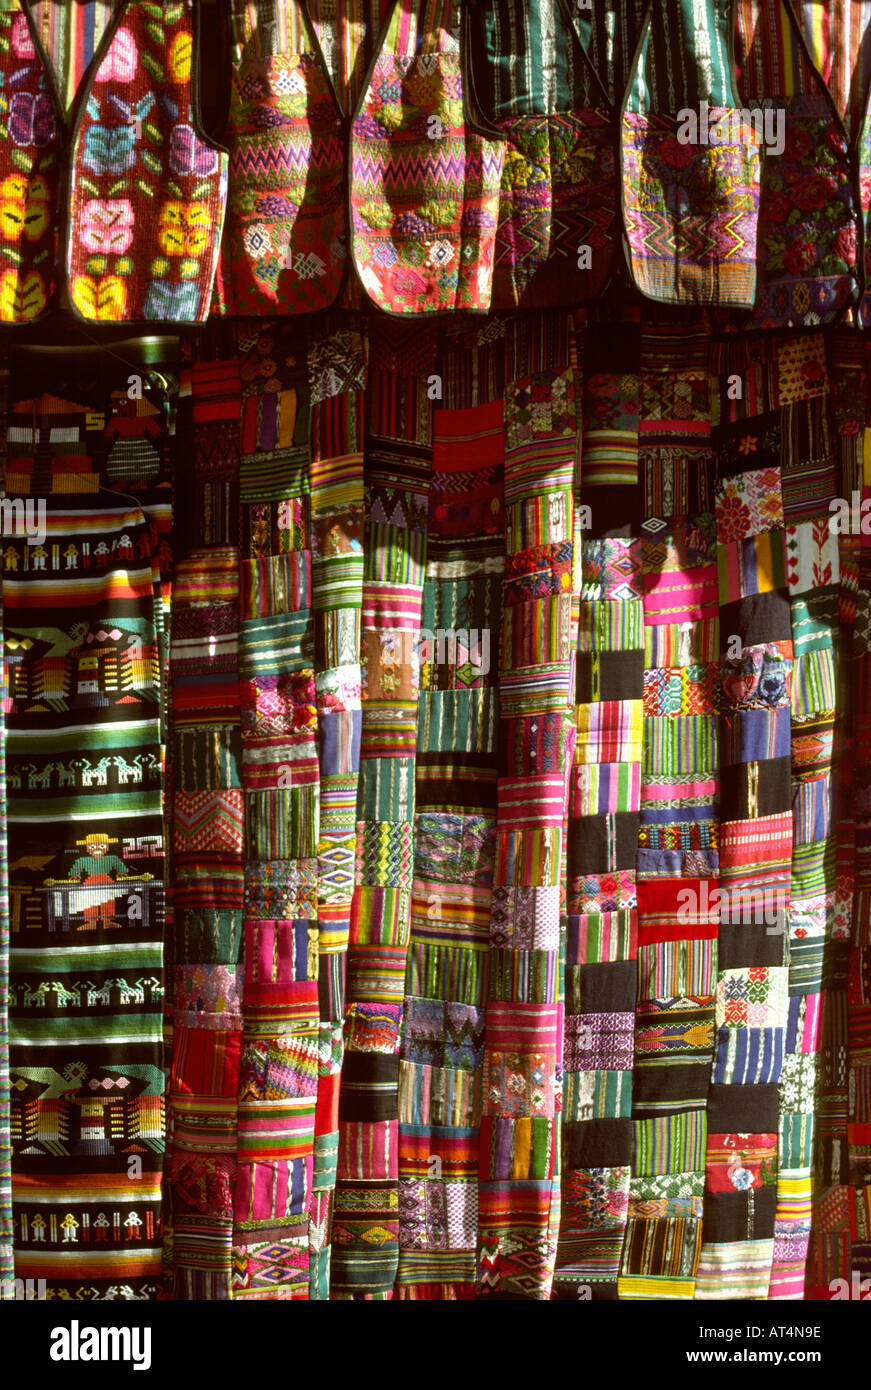 Guatemala Highlands Chichicastenango market embroidered textiles Stock Photo